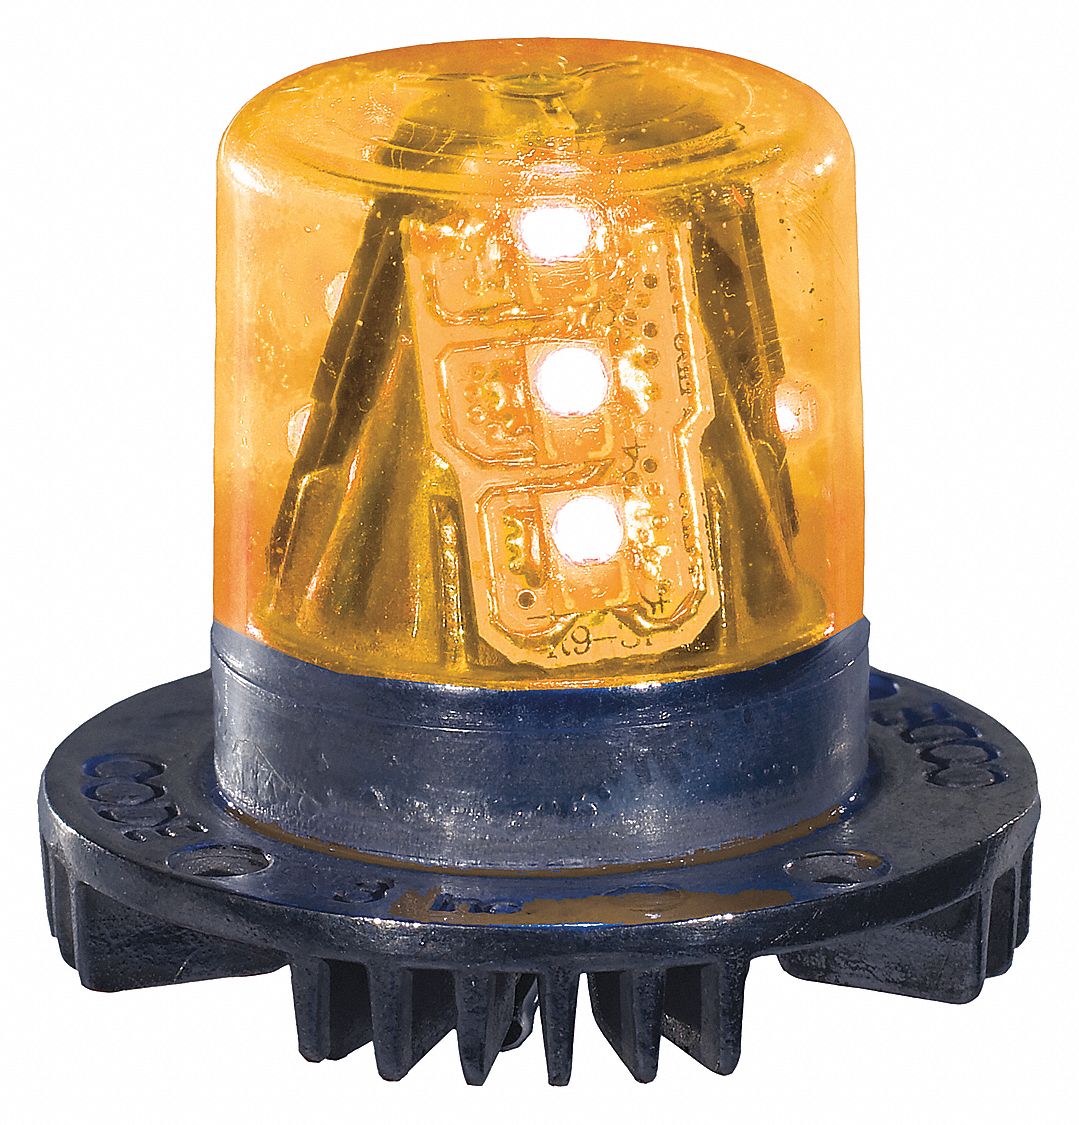 LED Strobe Light Head: 30 Flash Patterns - Vehicle Lighting, Permanent, Pigtail, LED